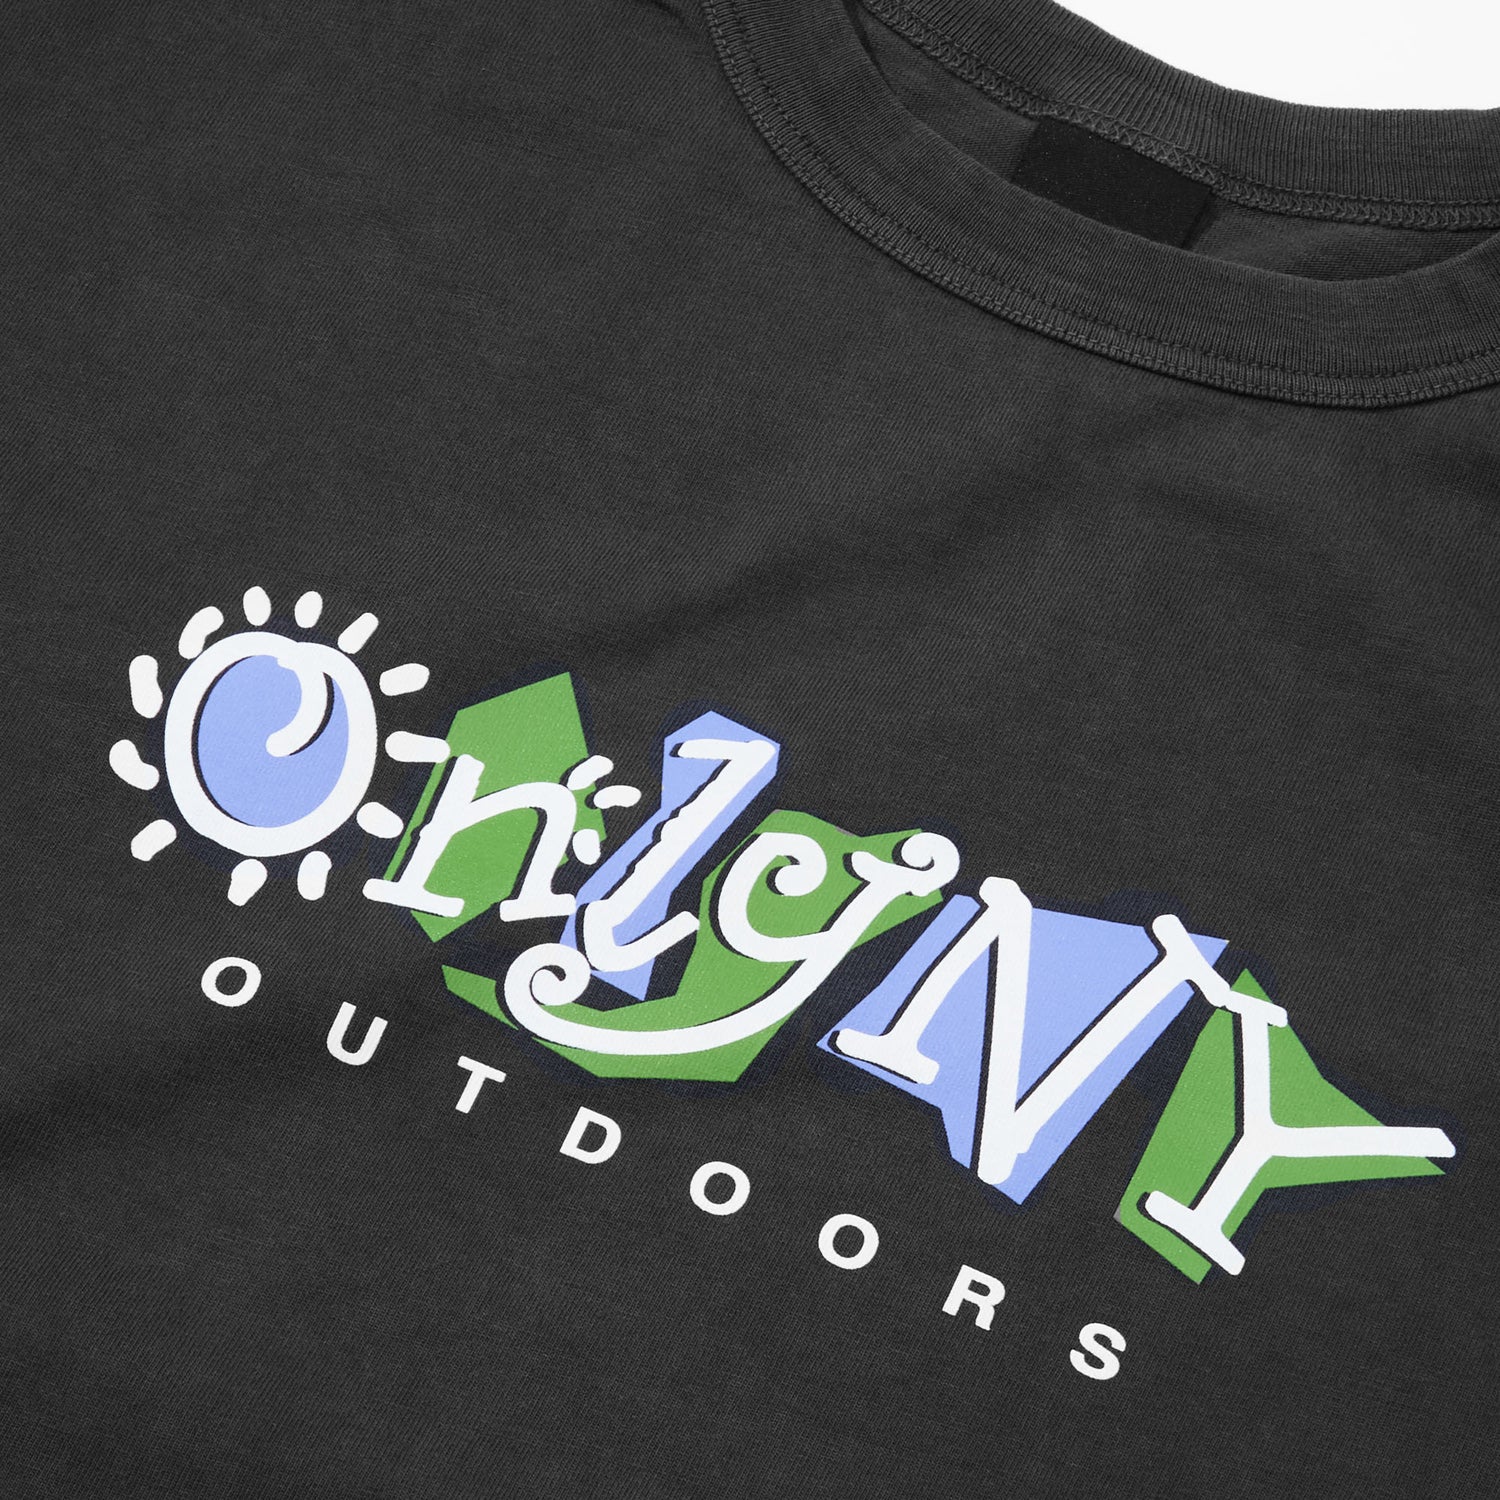 Only NY Outdoor Sunshine Logo Crop T-Shirt - Vintage Black